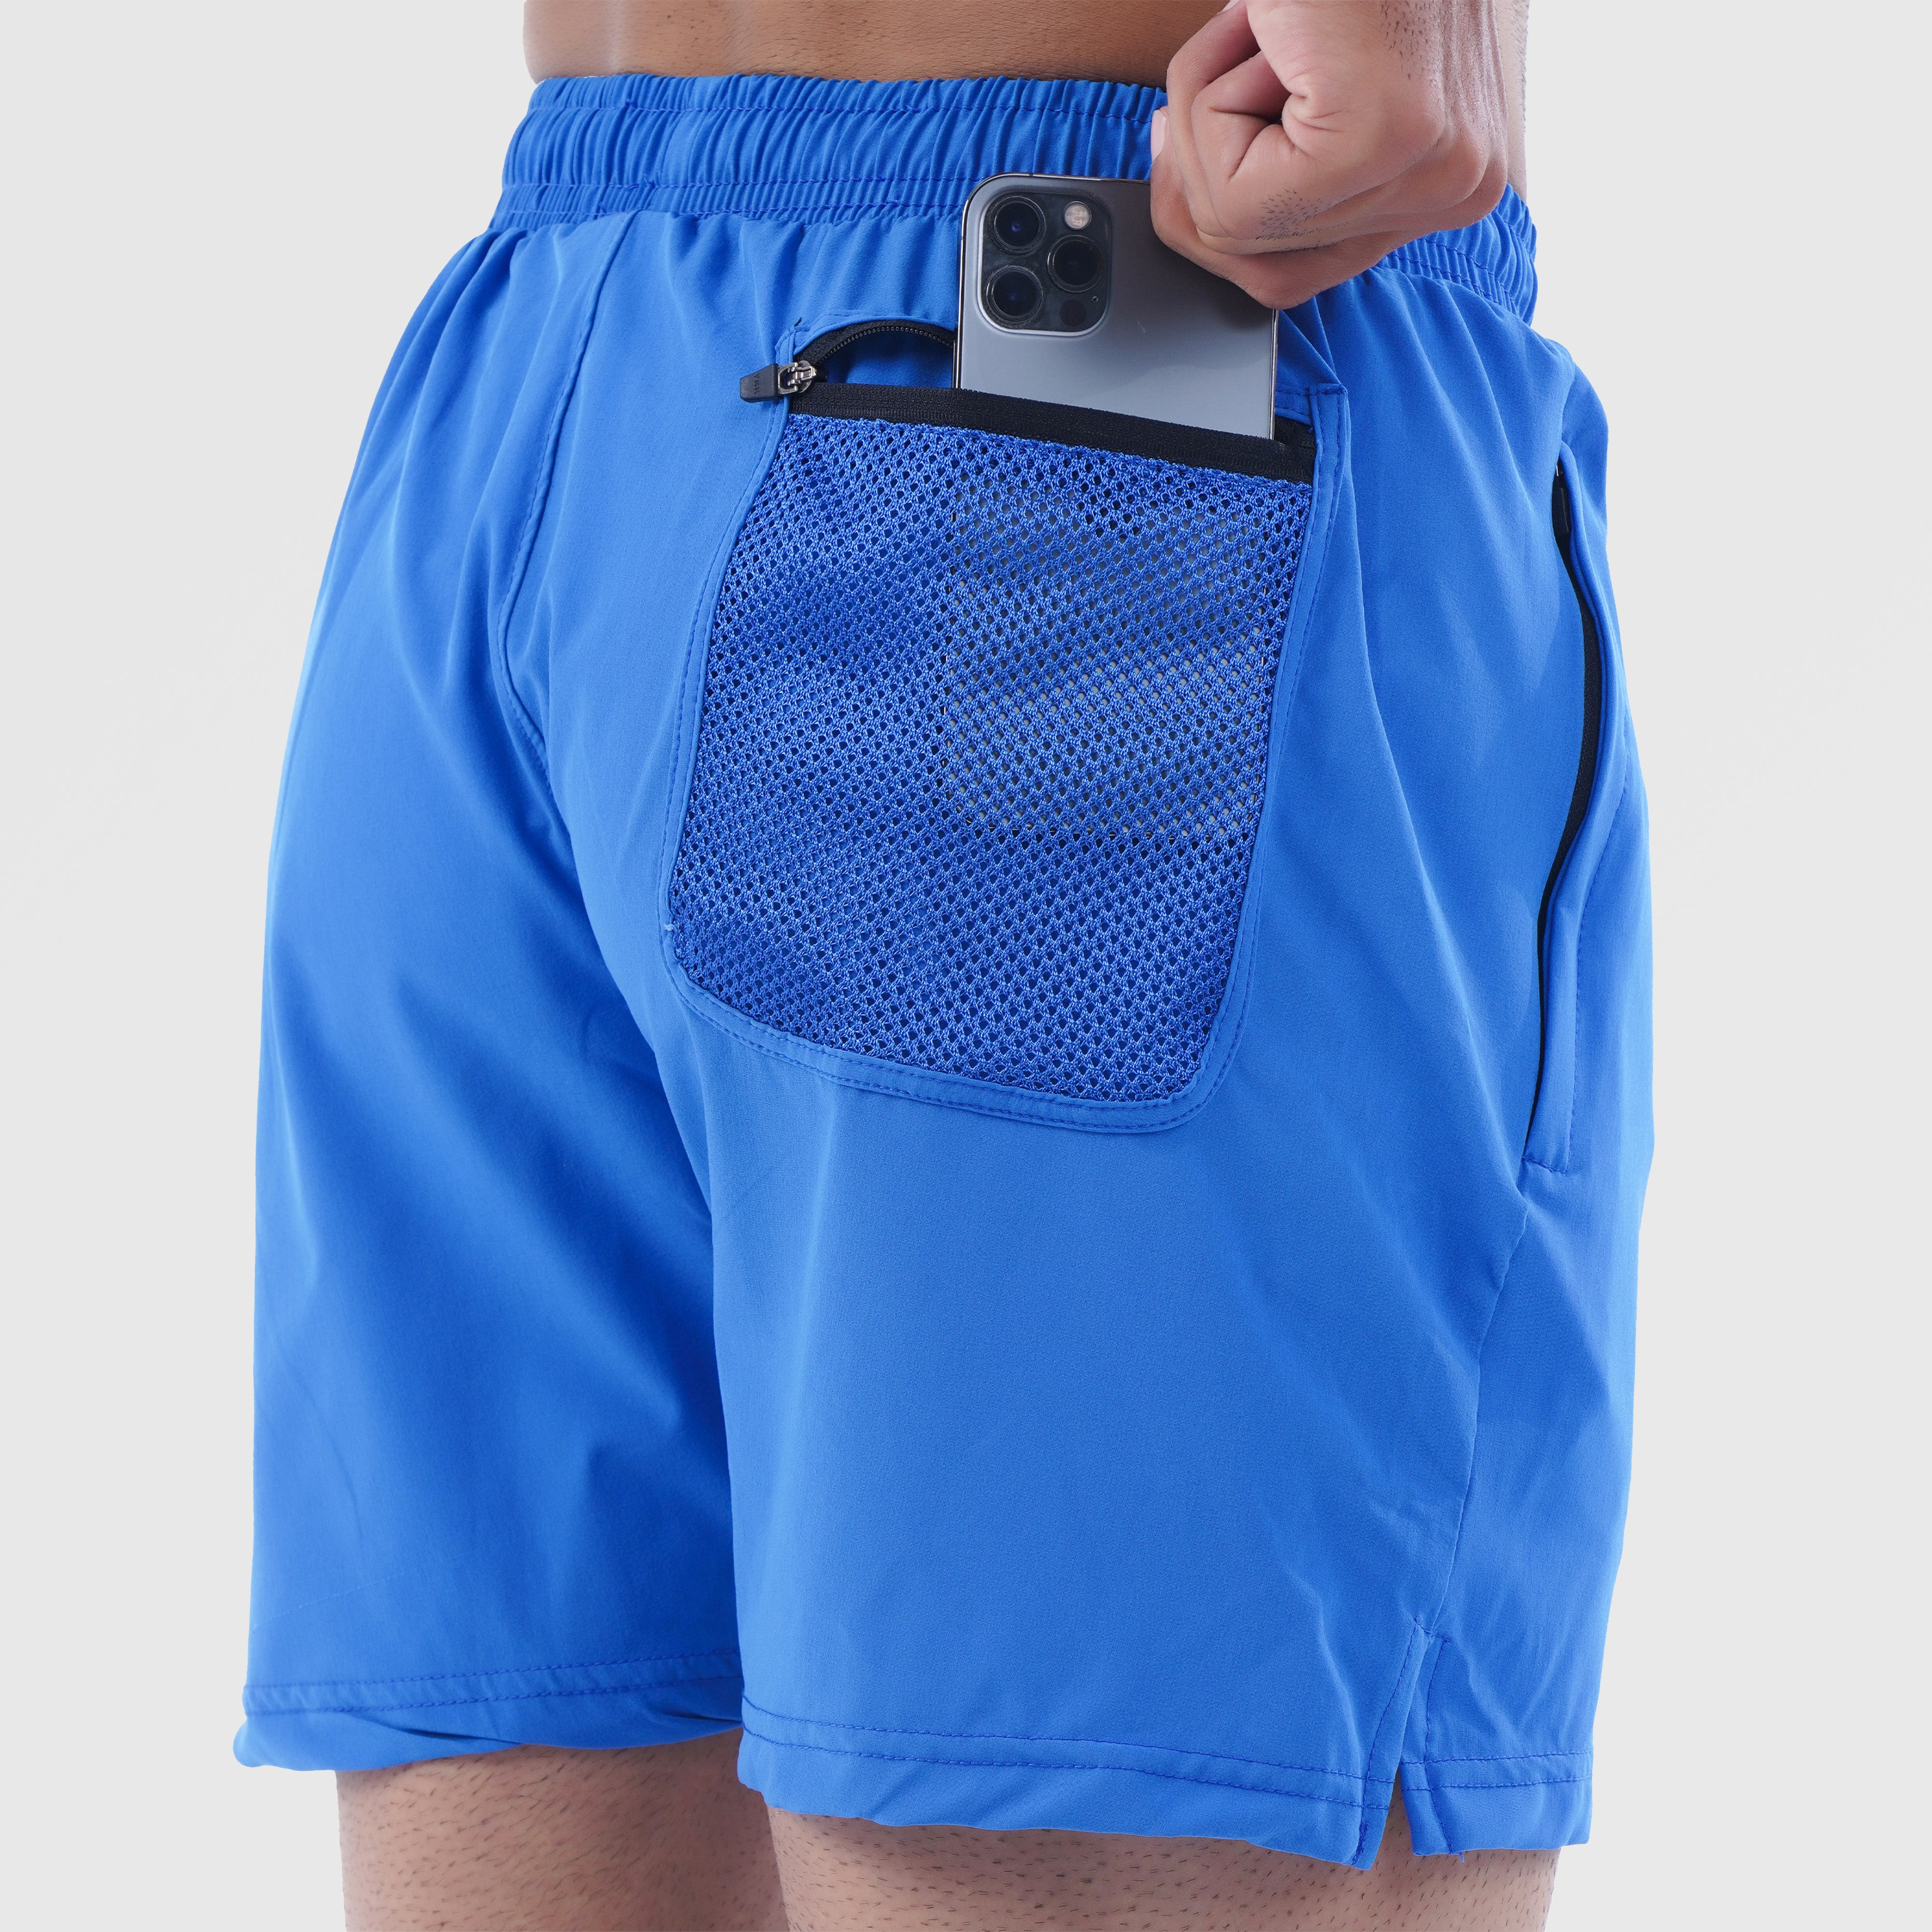 FlexEase Shorts (Electric Blue)